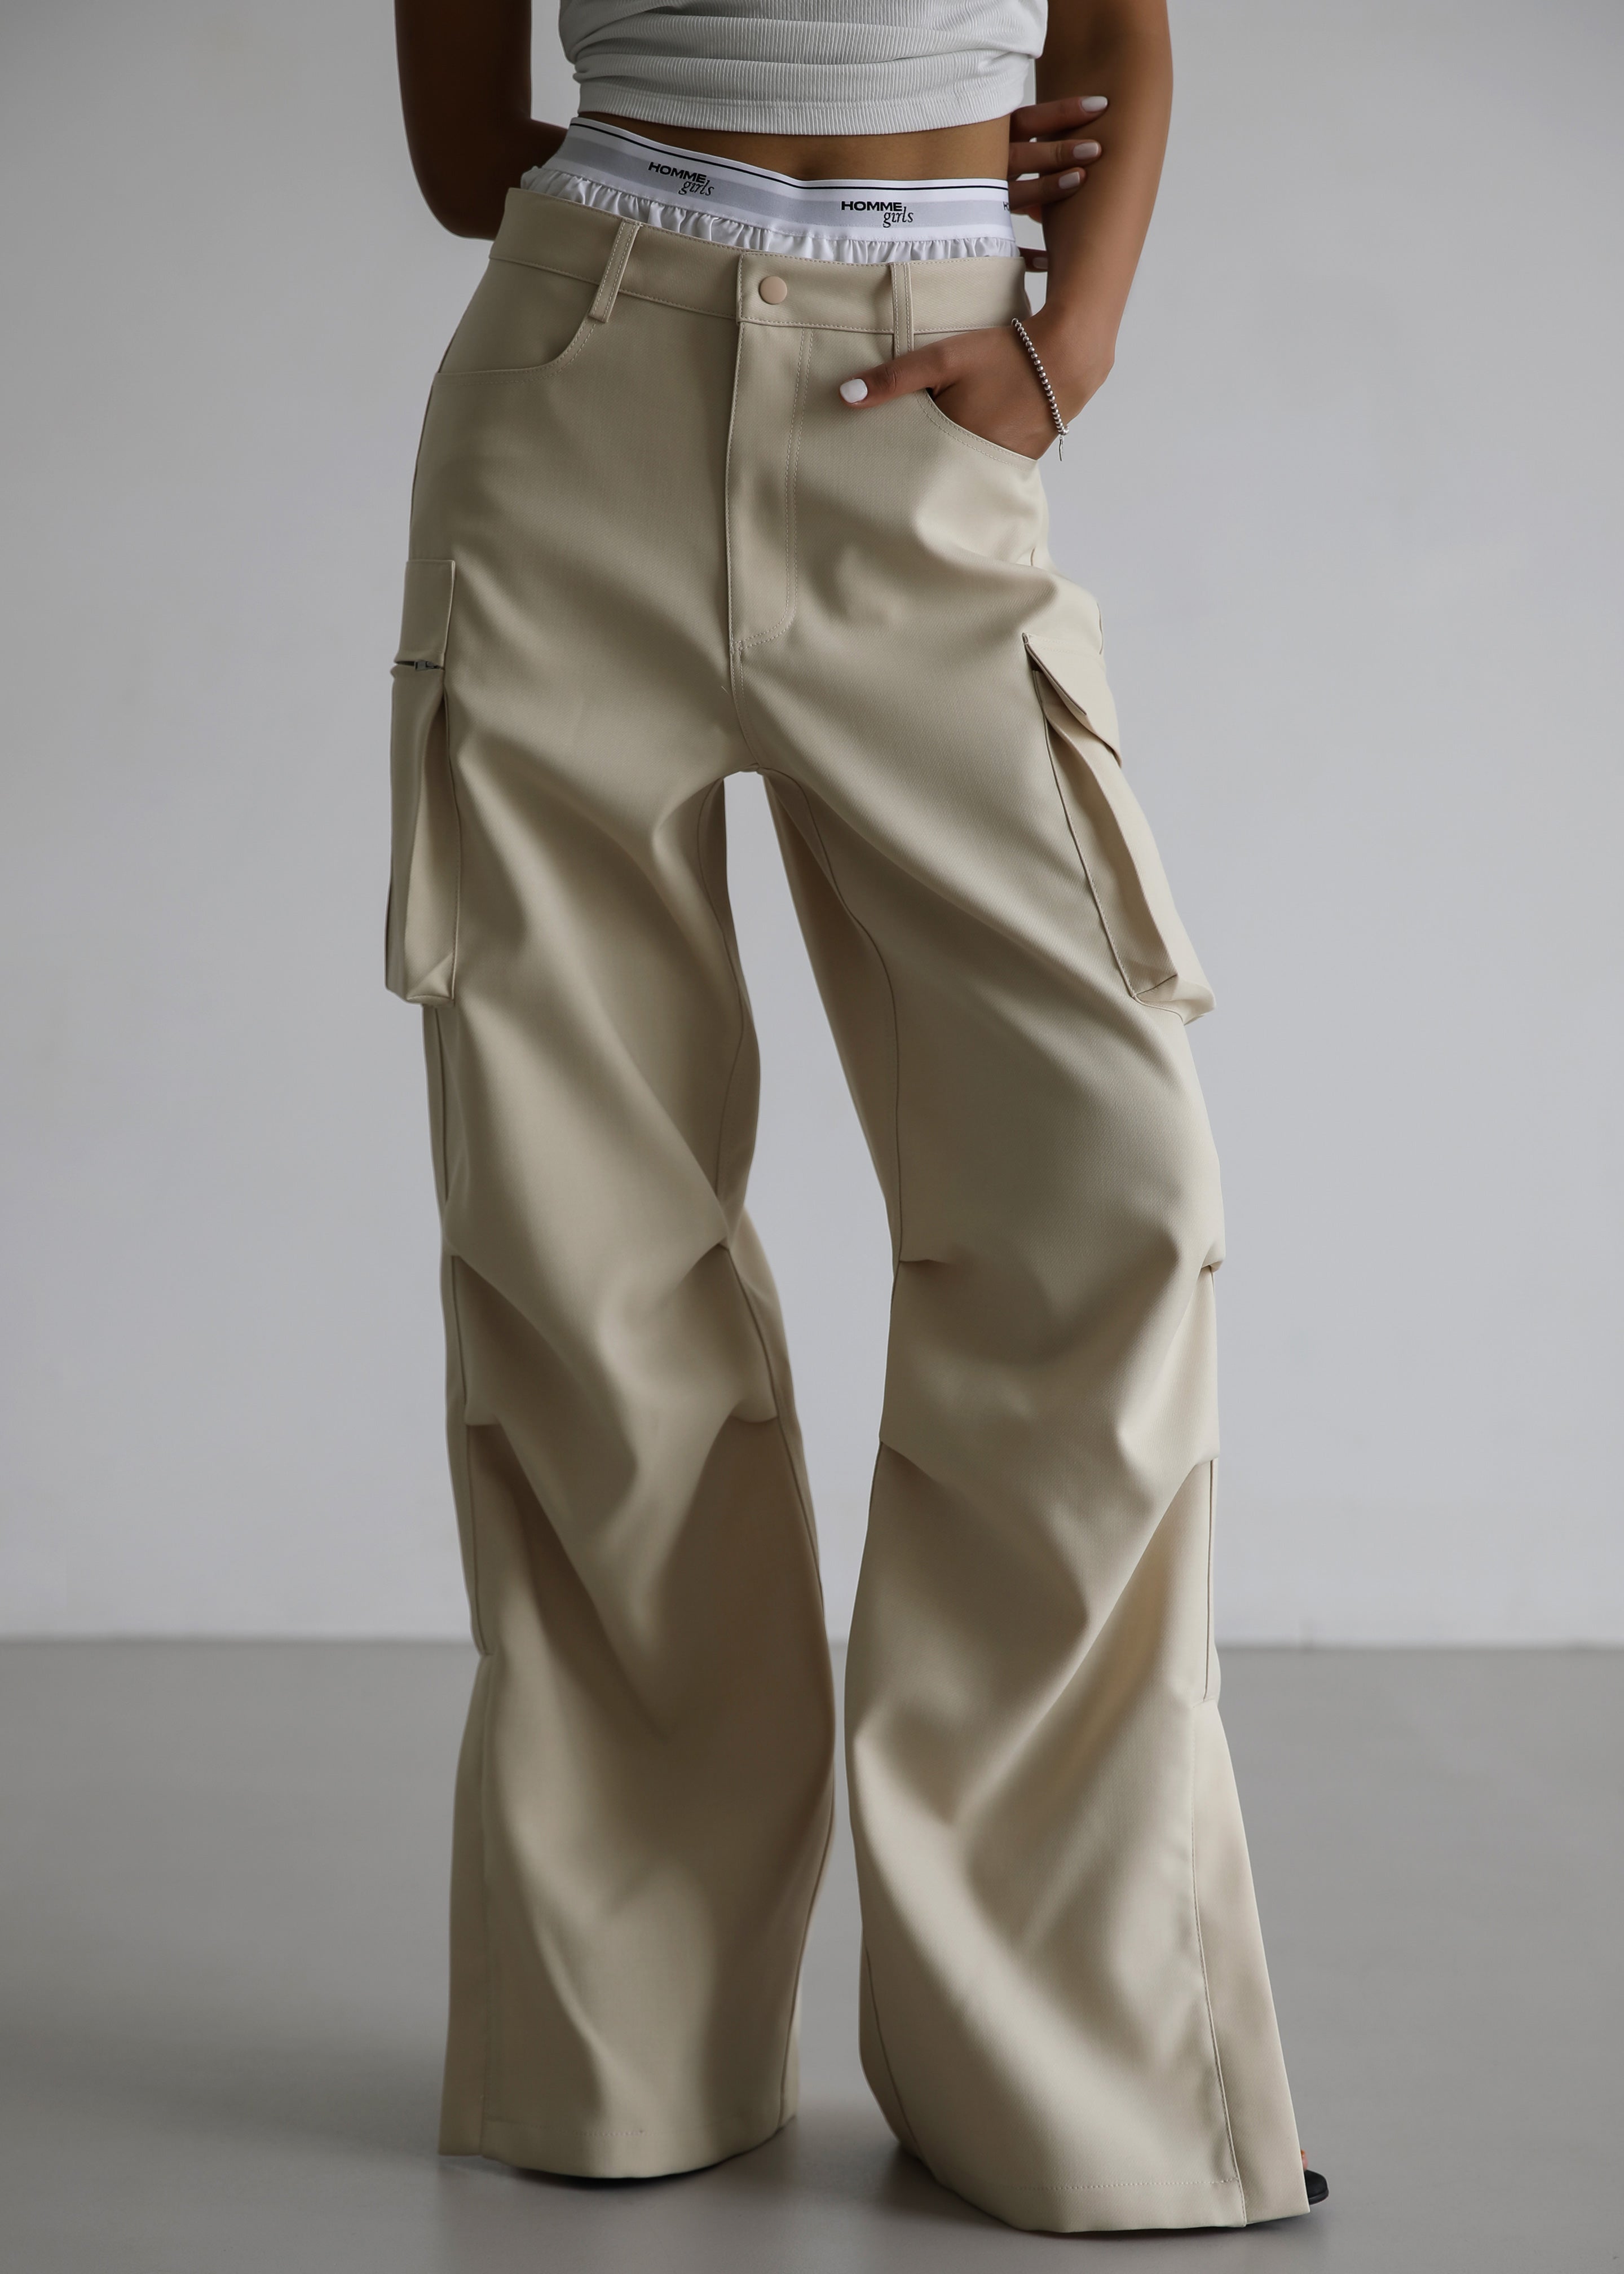 Abercrombie & Fitch Tie Cargo Pants for Women | Mercari